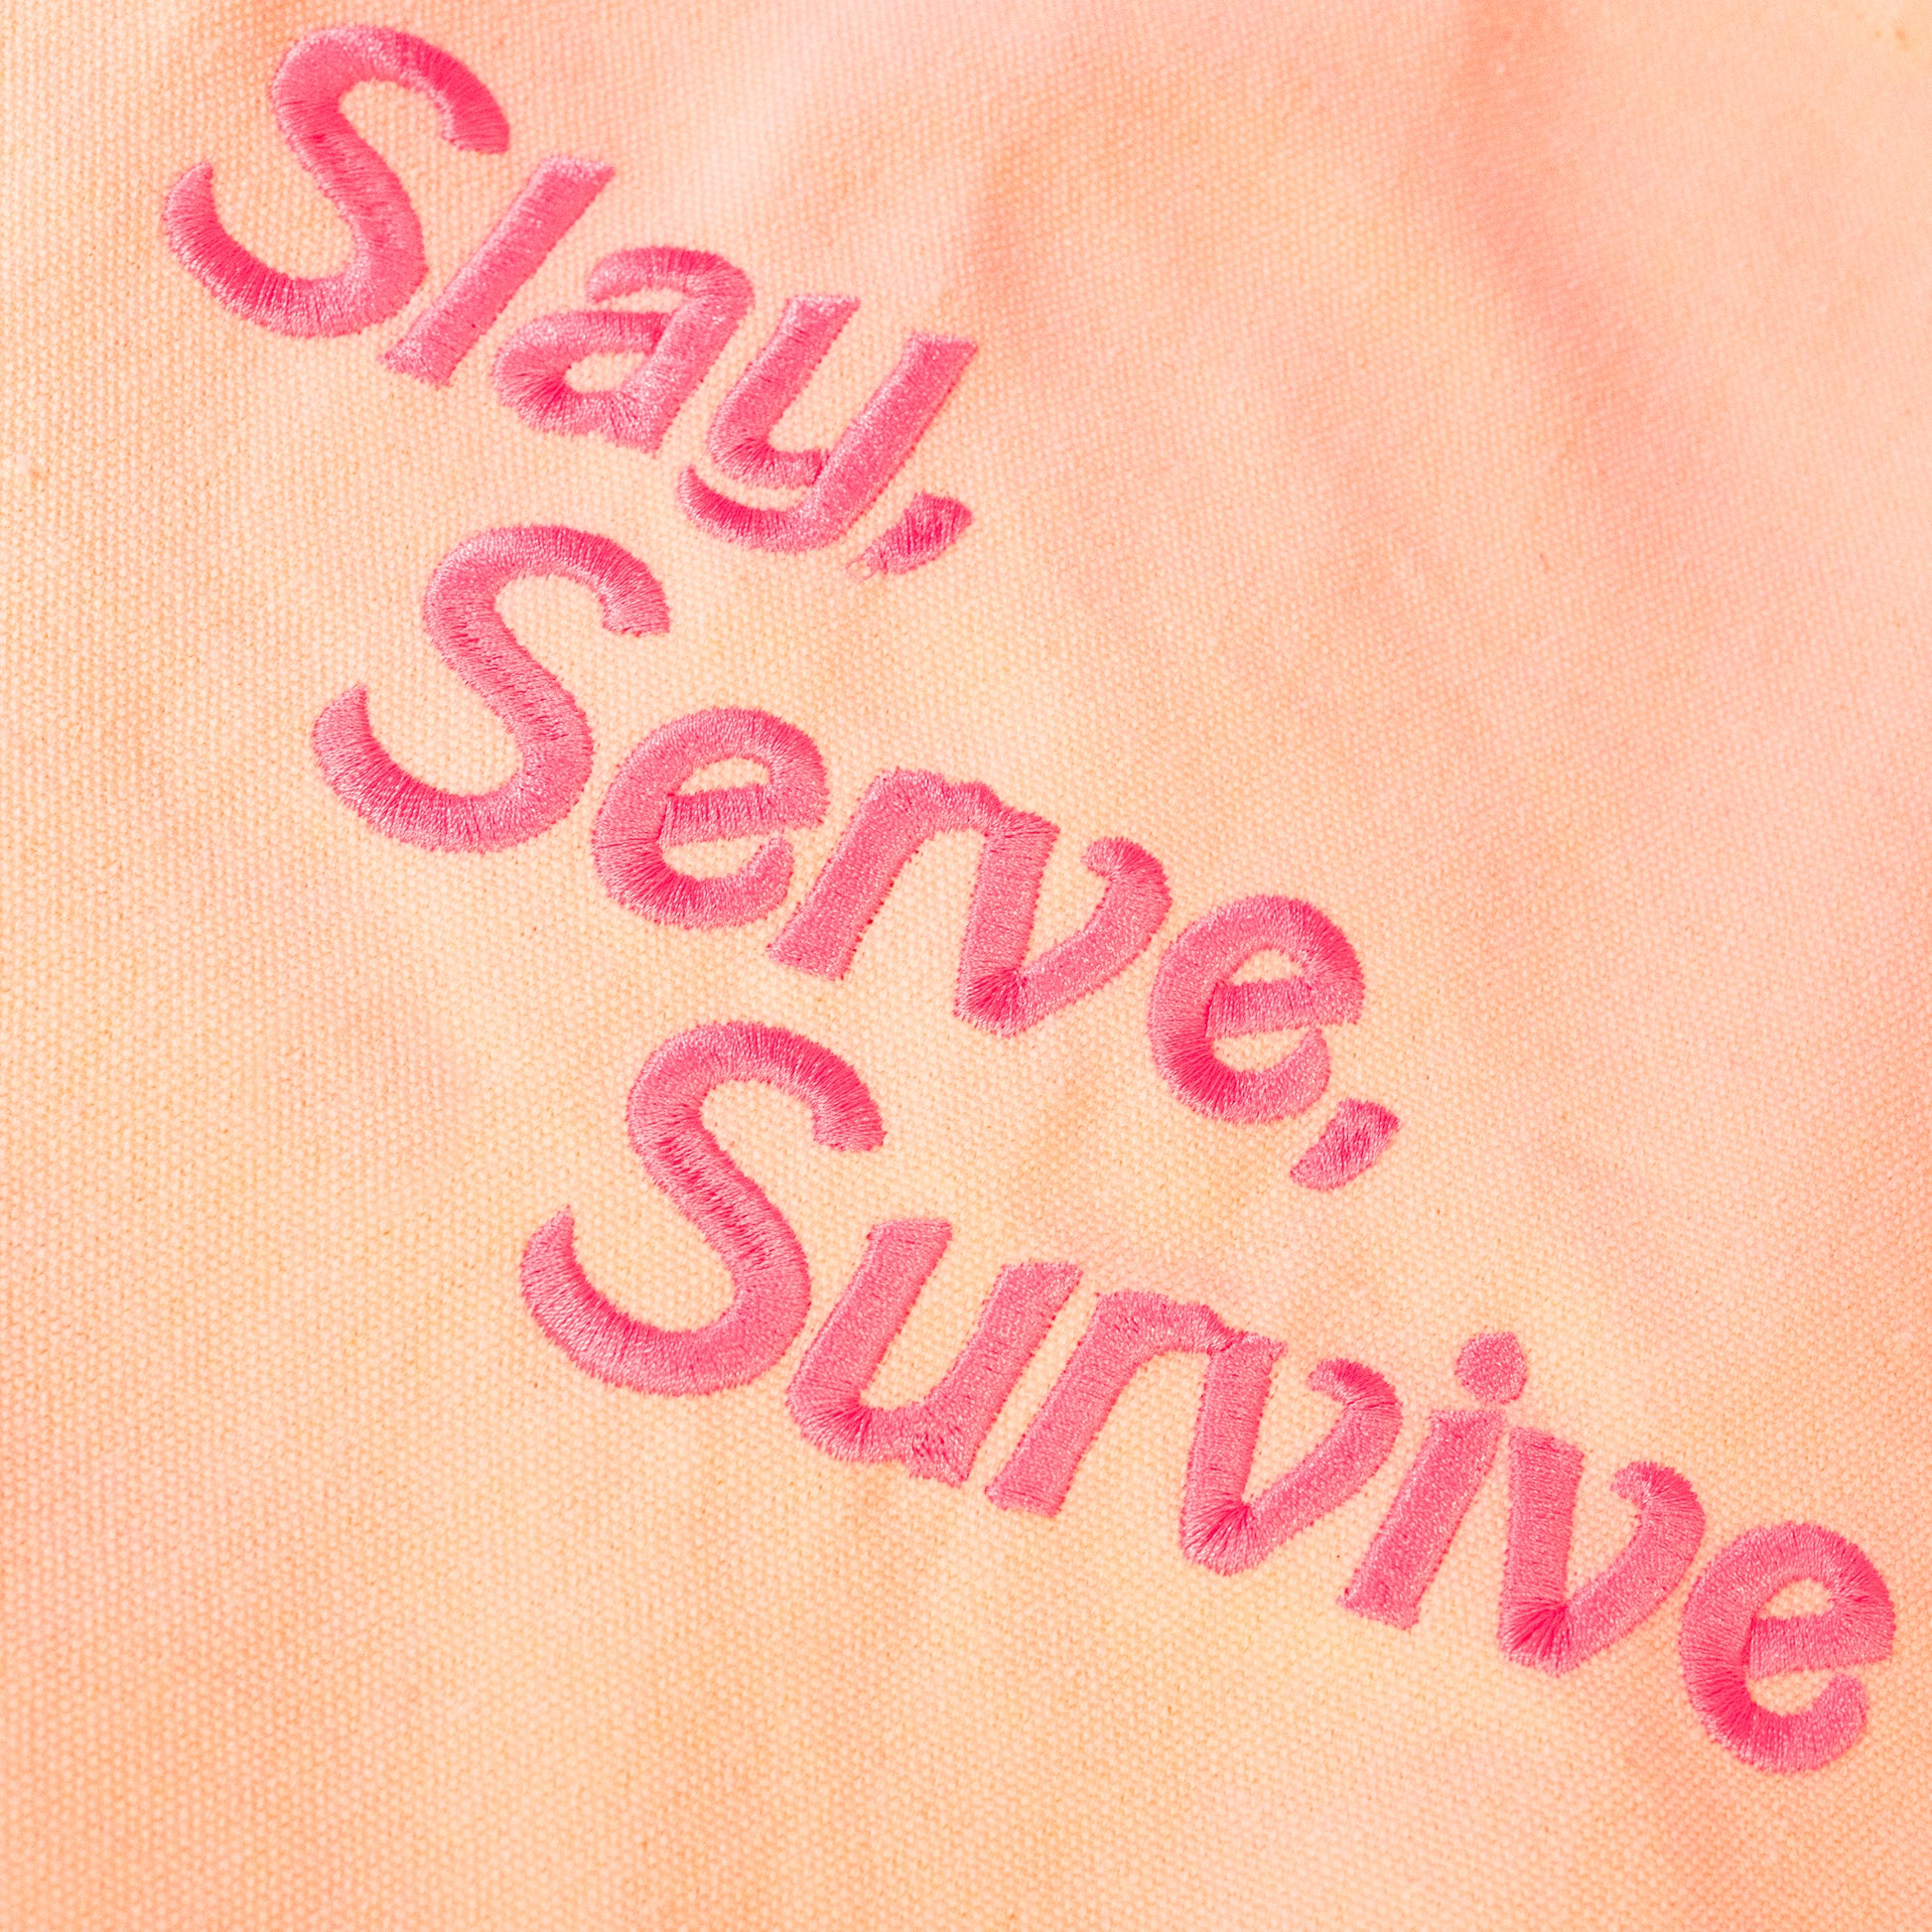 slay serve survive in pink